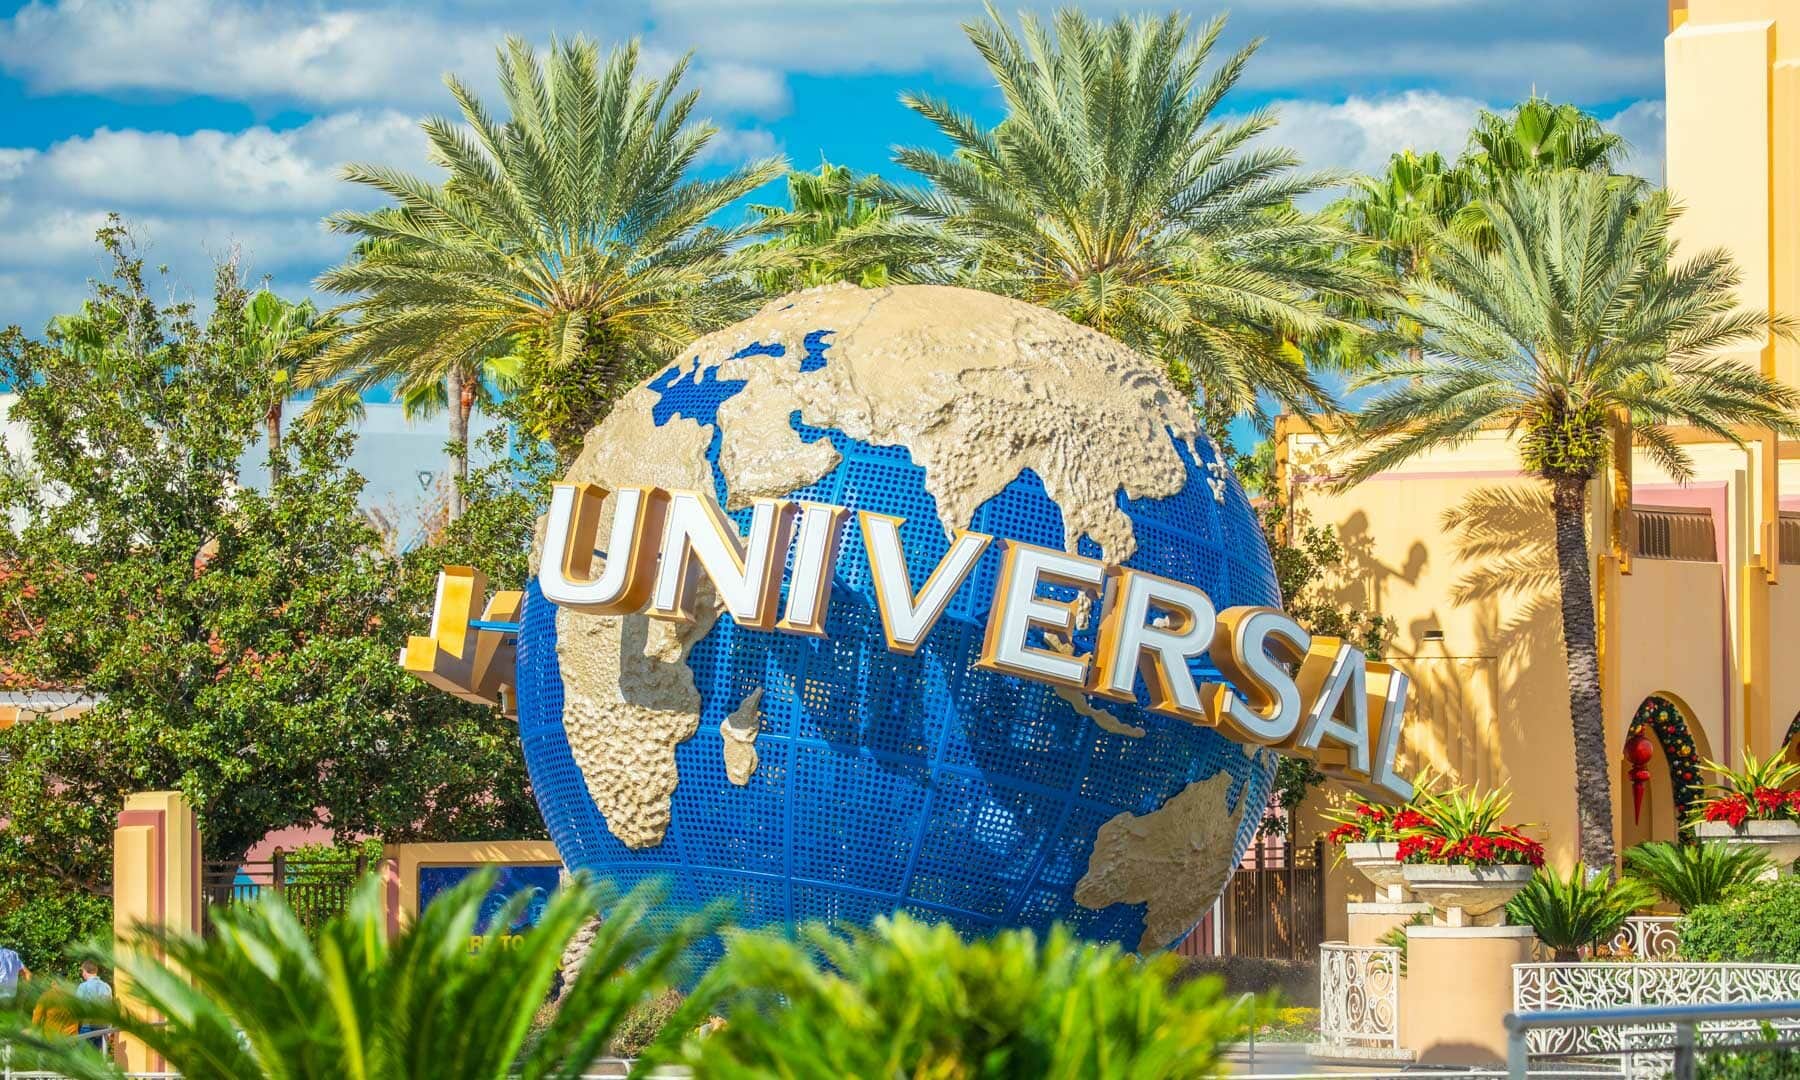 The Best Hotels Near Universal Studios in Orlando, Florida